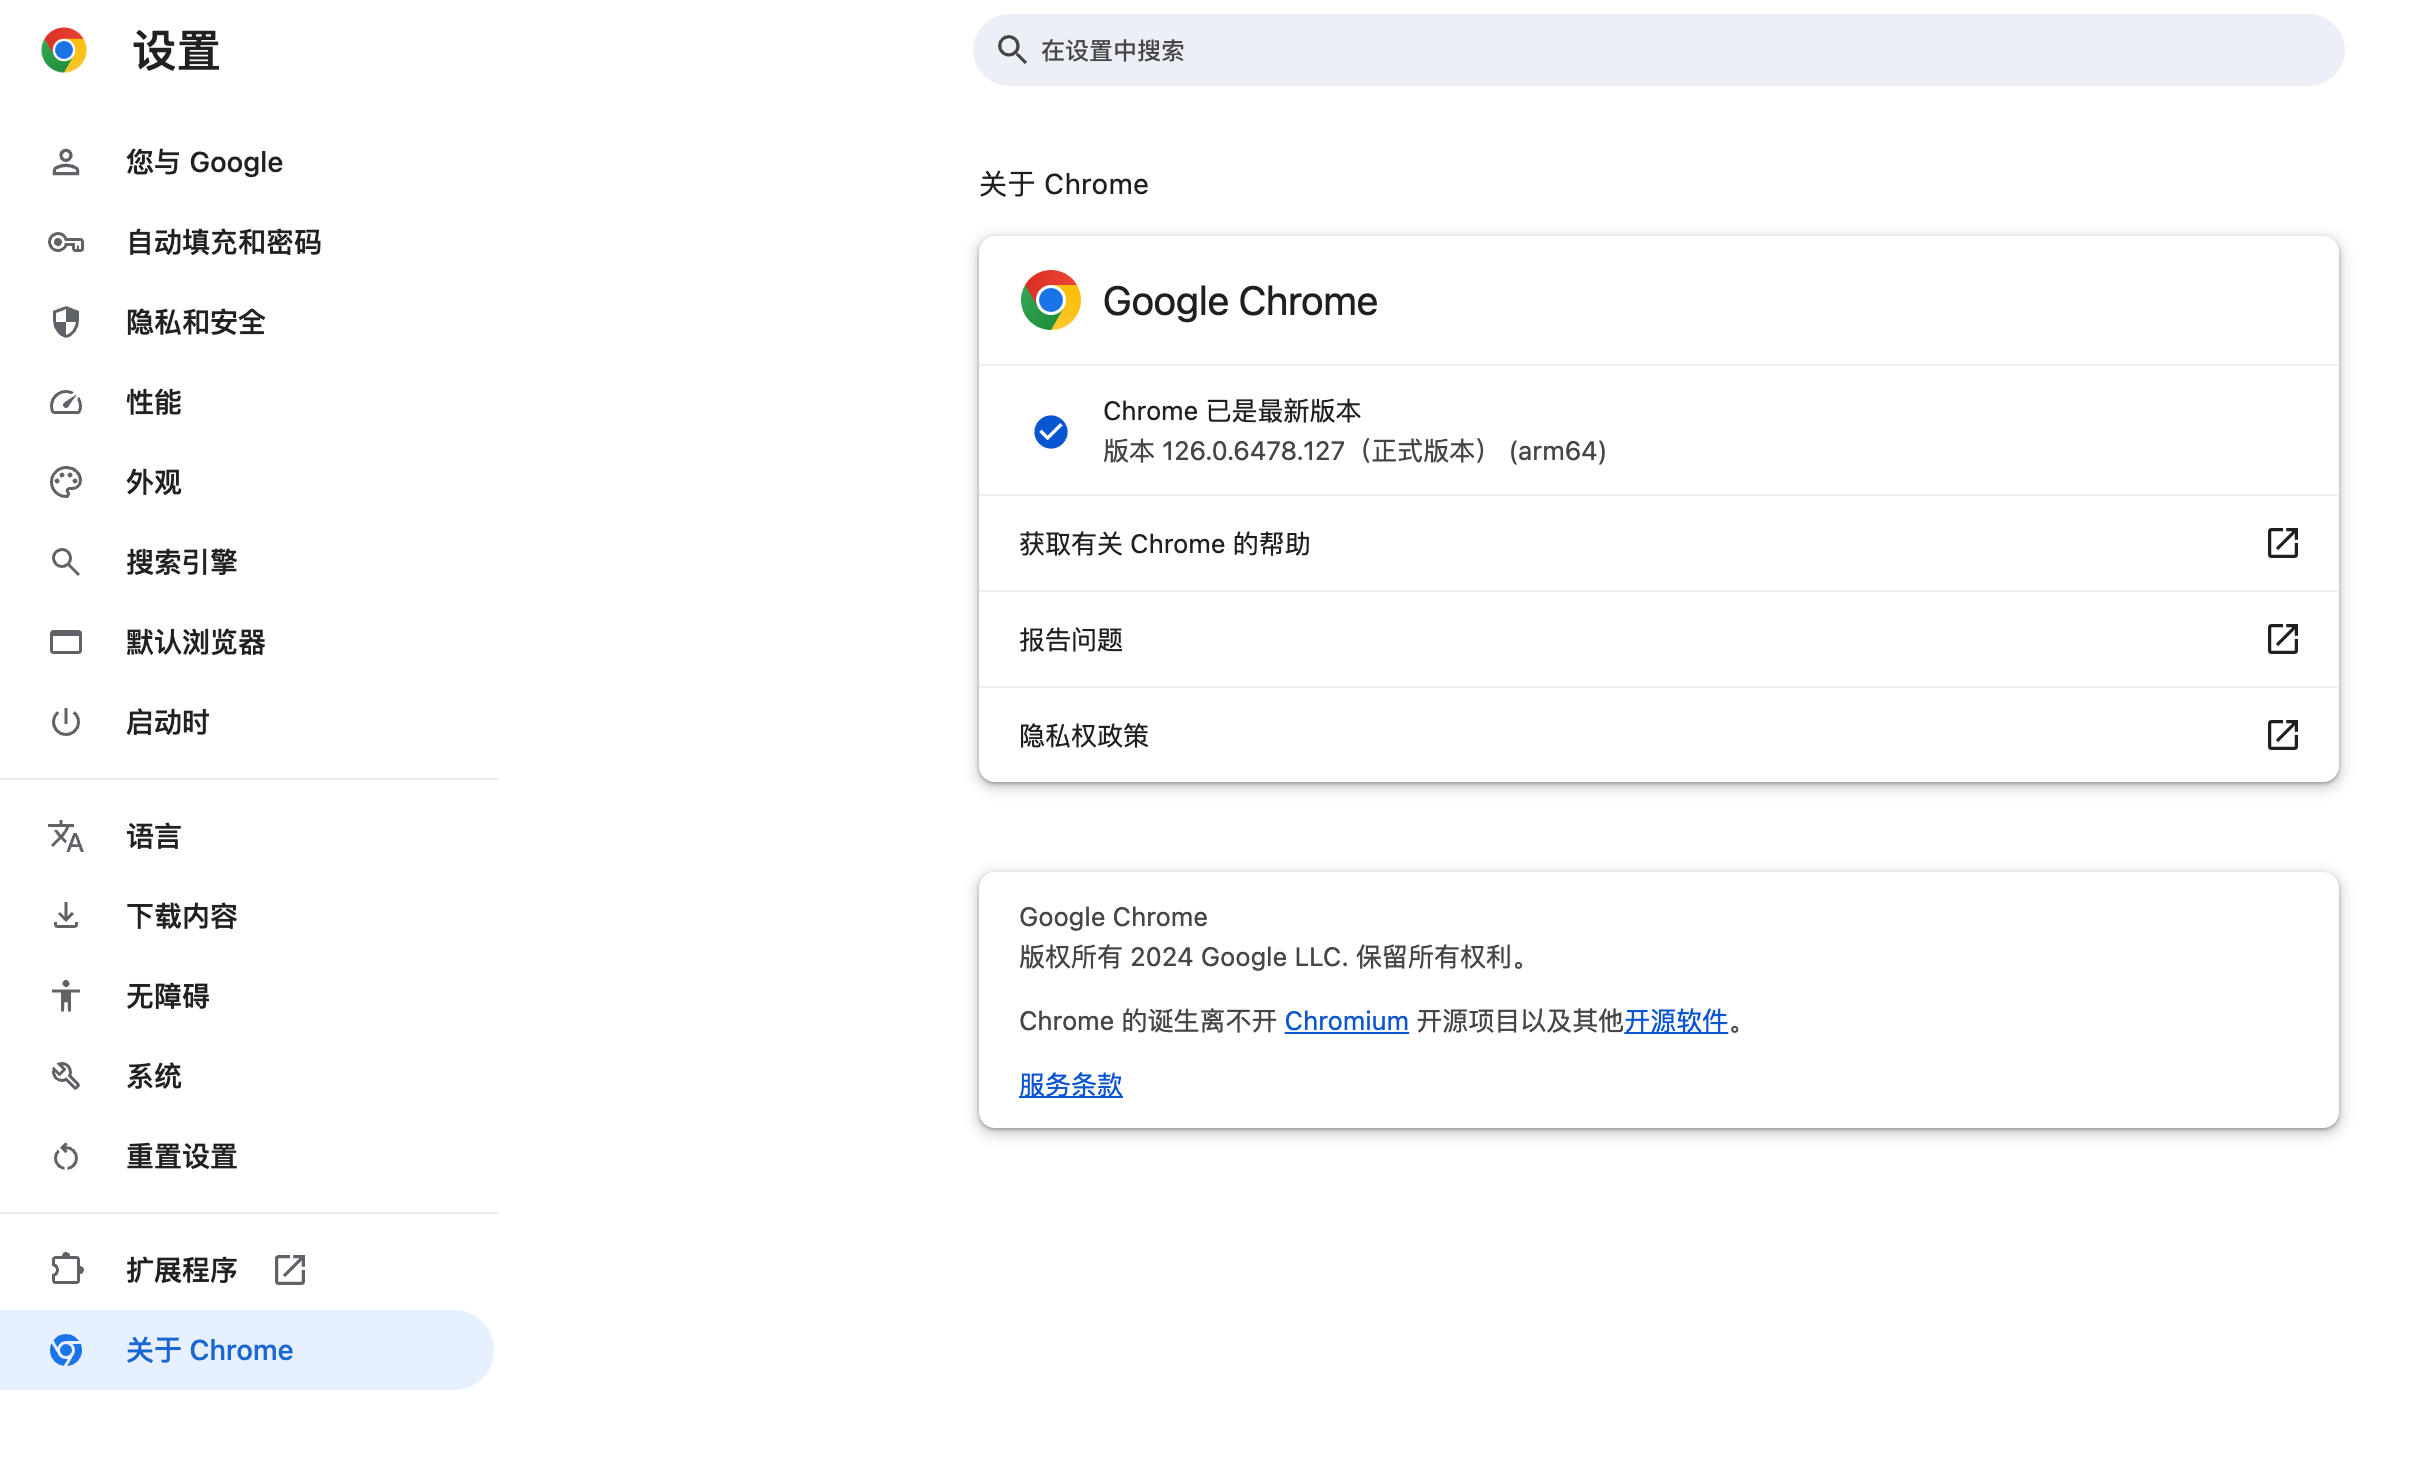 Google Chrome for Mac v126.0.6478.127 谷歌浏览器 中文正式版 免激活下载-1